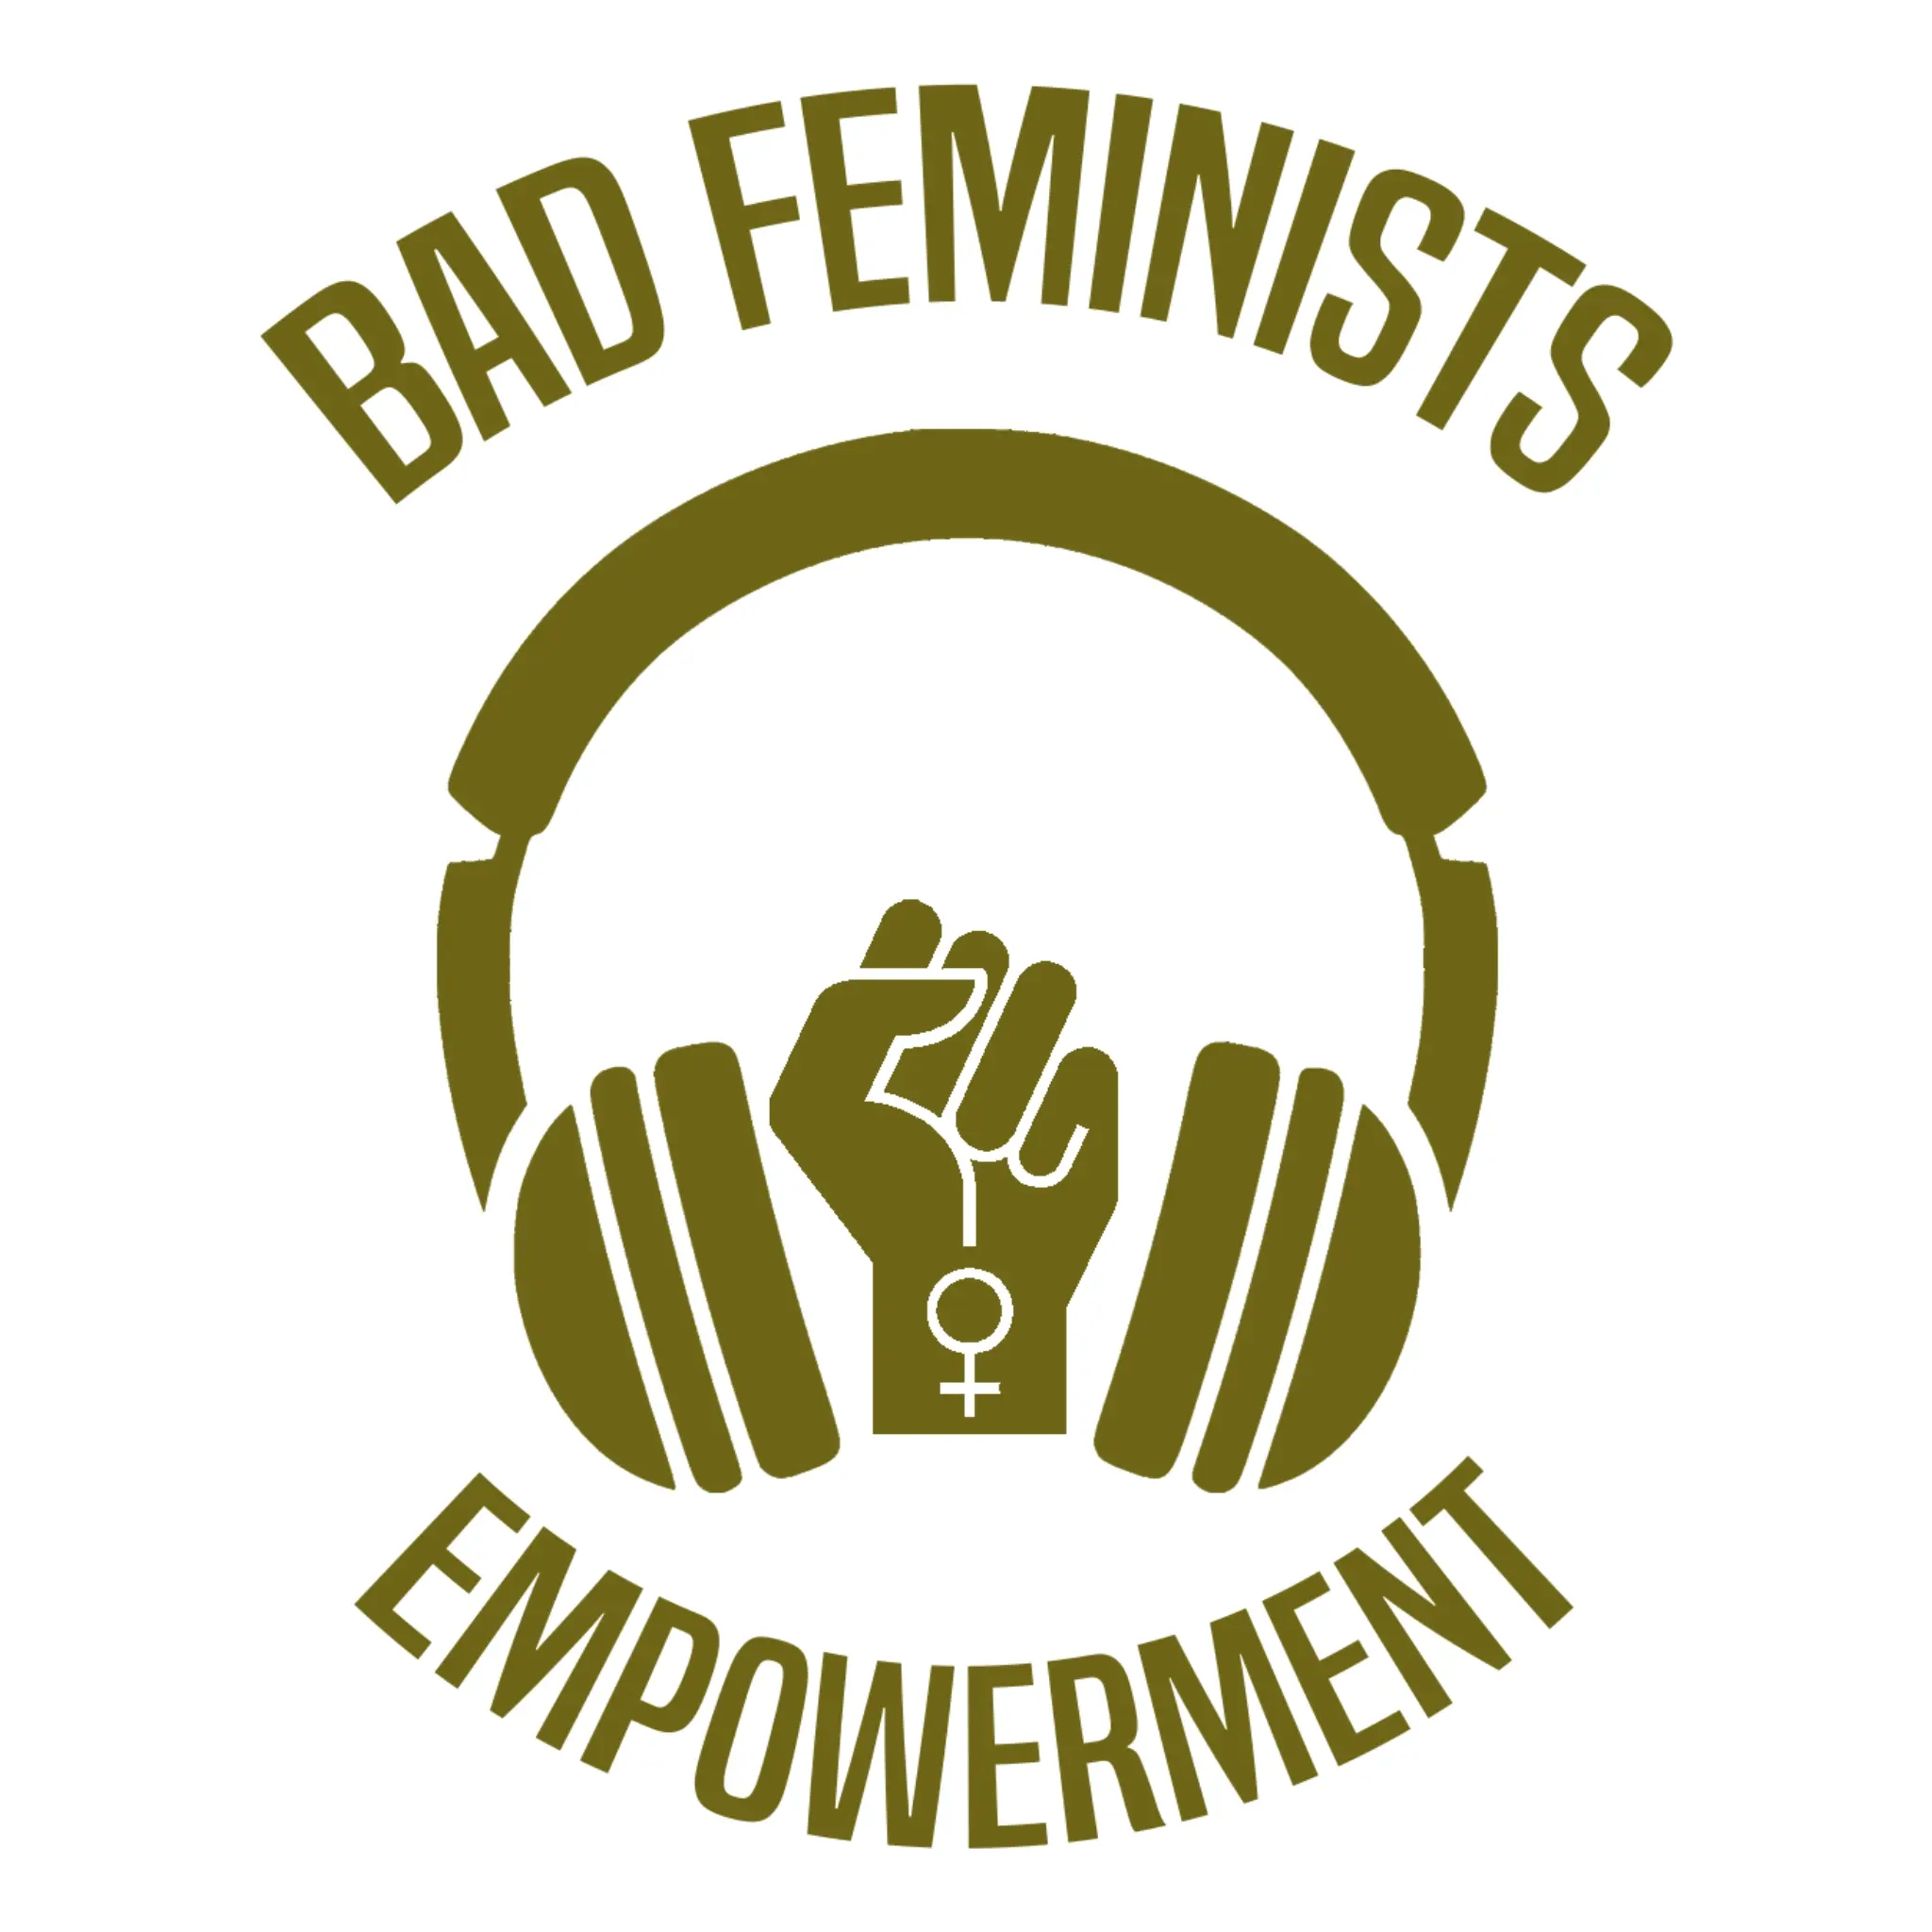 We like: Bad Feminists